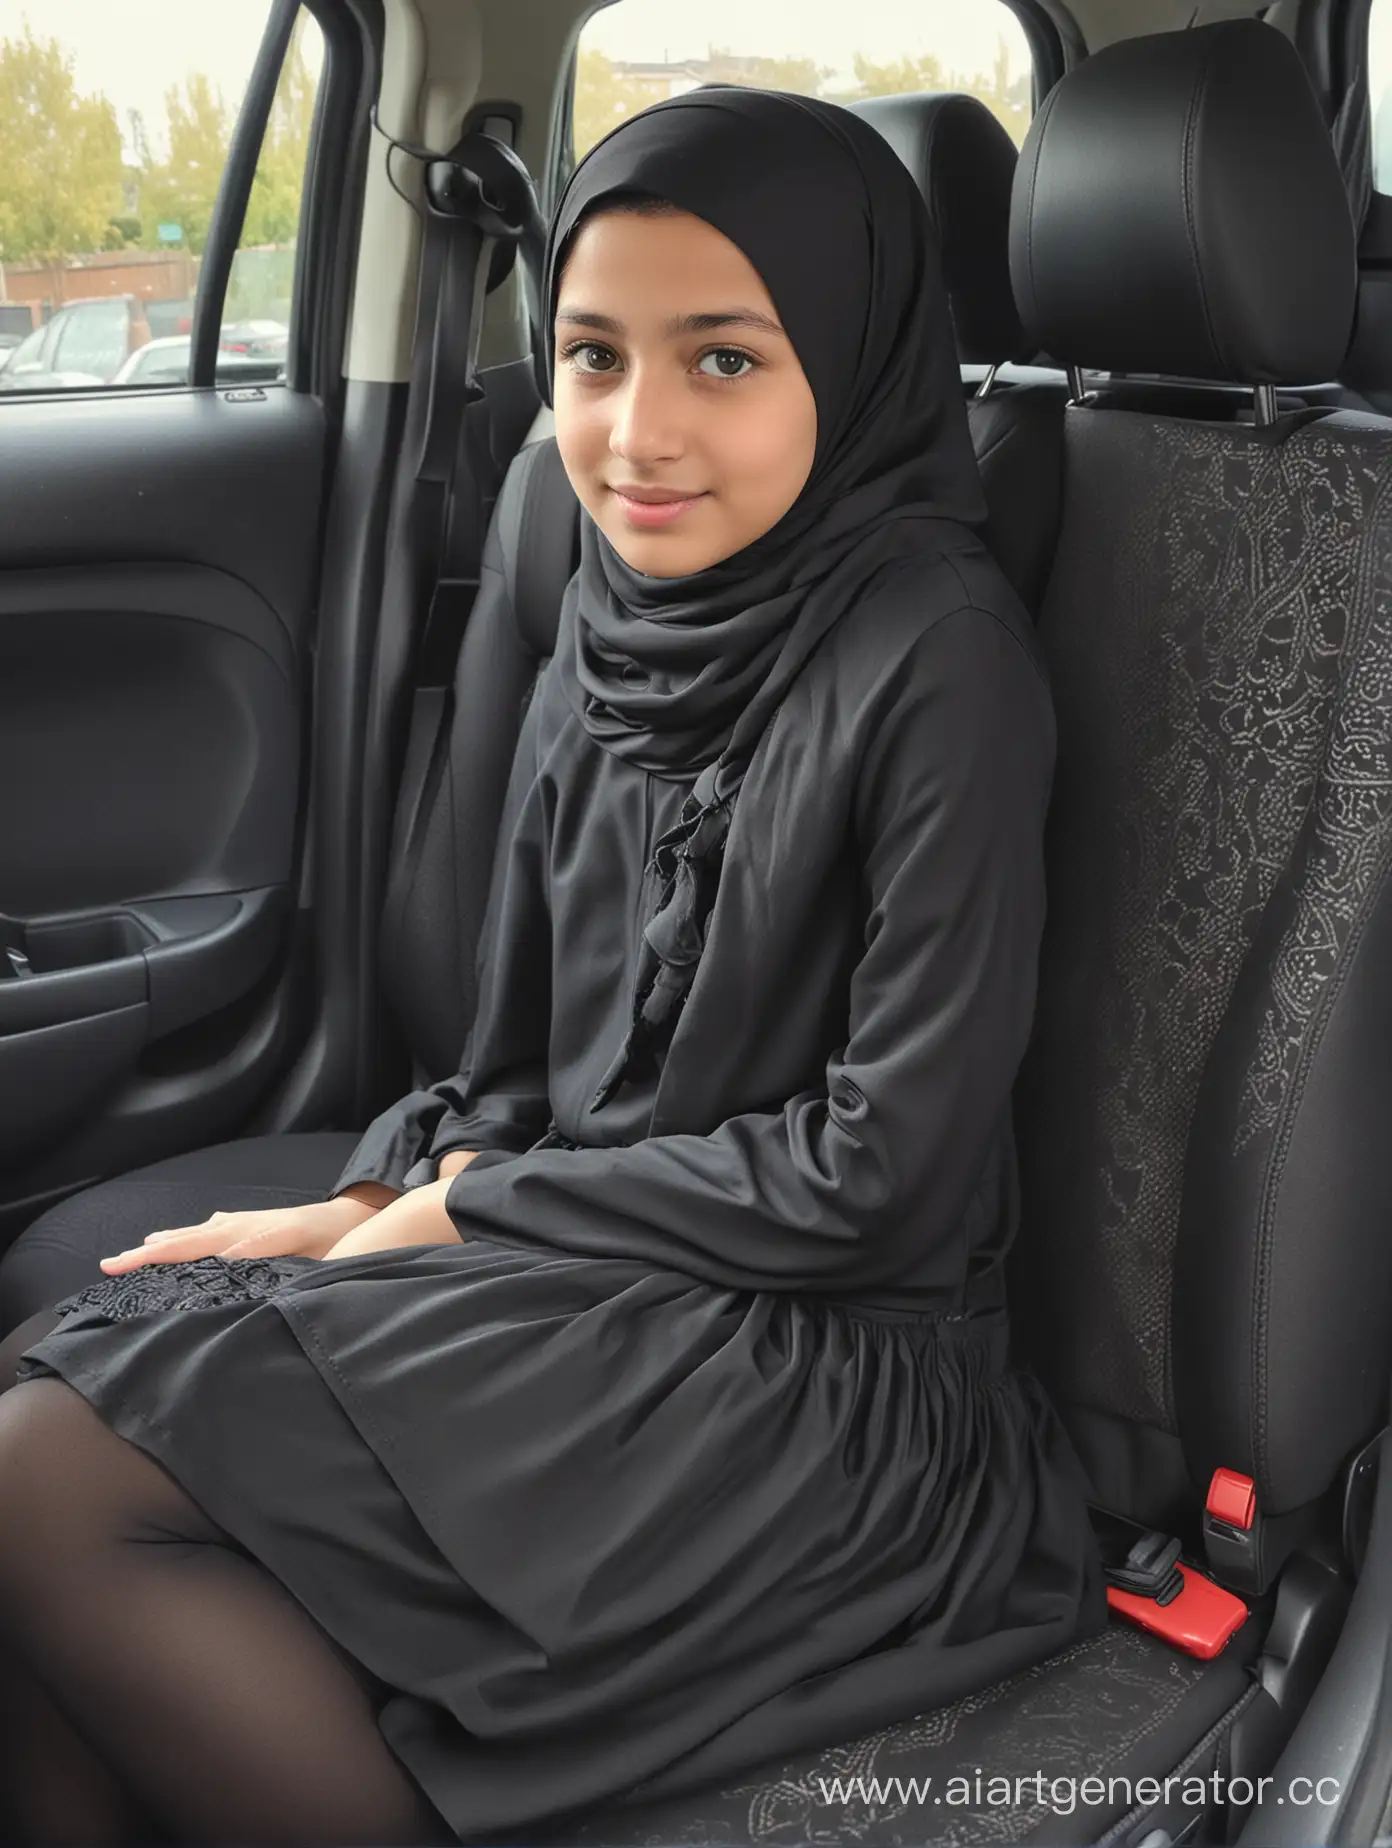 Young-Girl-in-Hijab-Sitting-on-Car-Seat